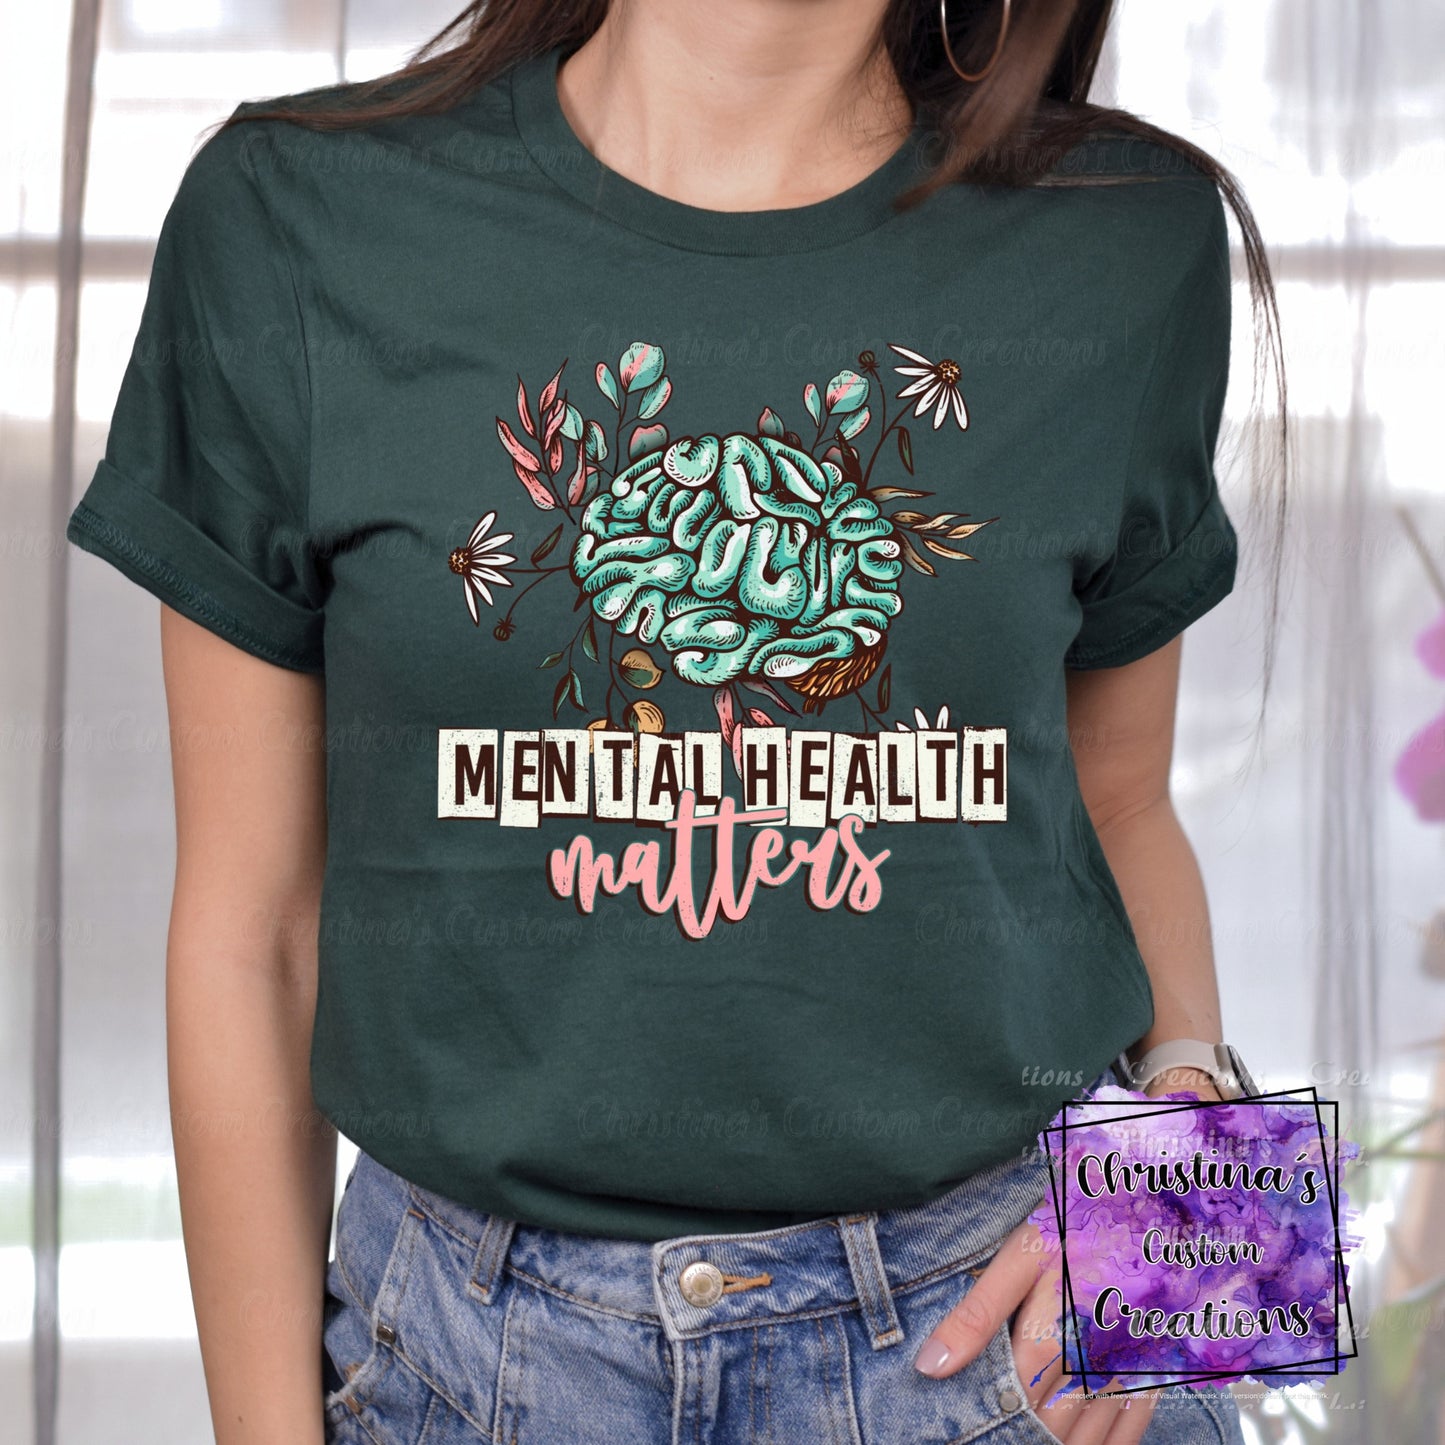 Mental Health Matters T-Shirt | Mental Health Awareness Shirt | Fast Shipping | Super Soft Shirts for Men/Women